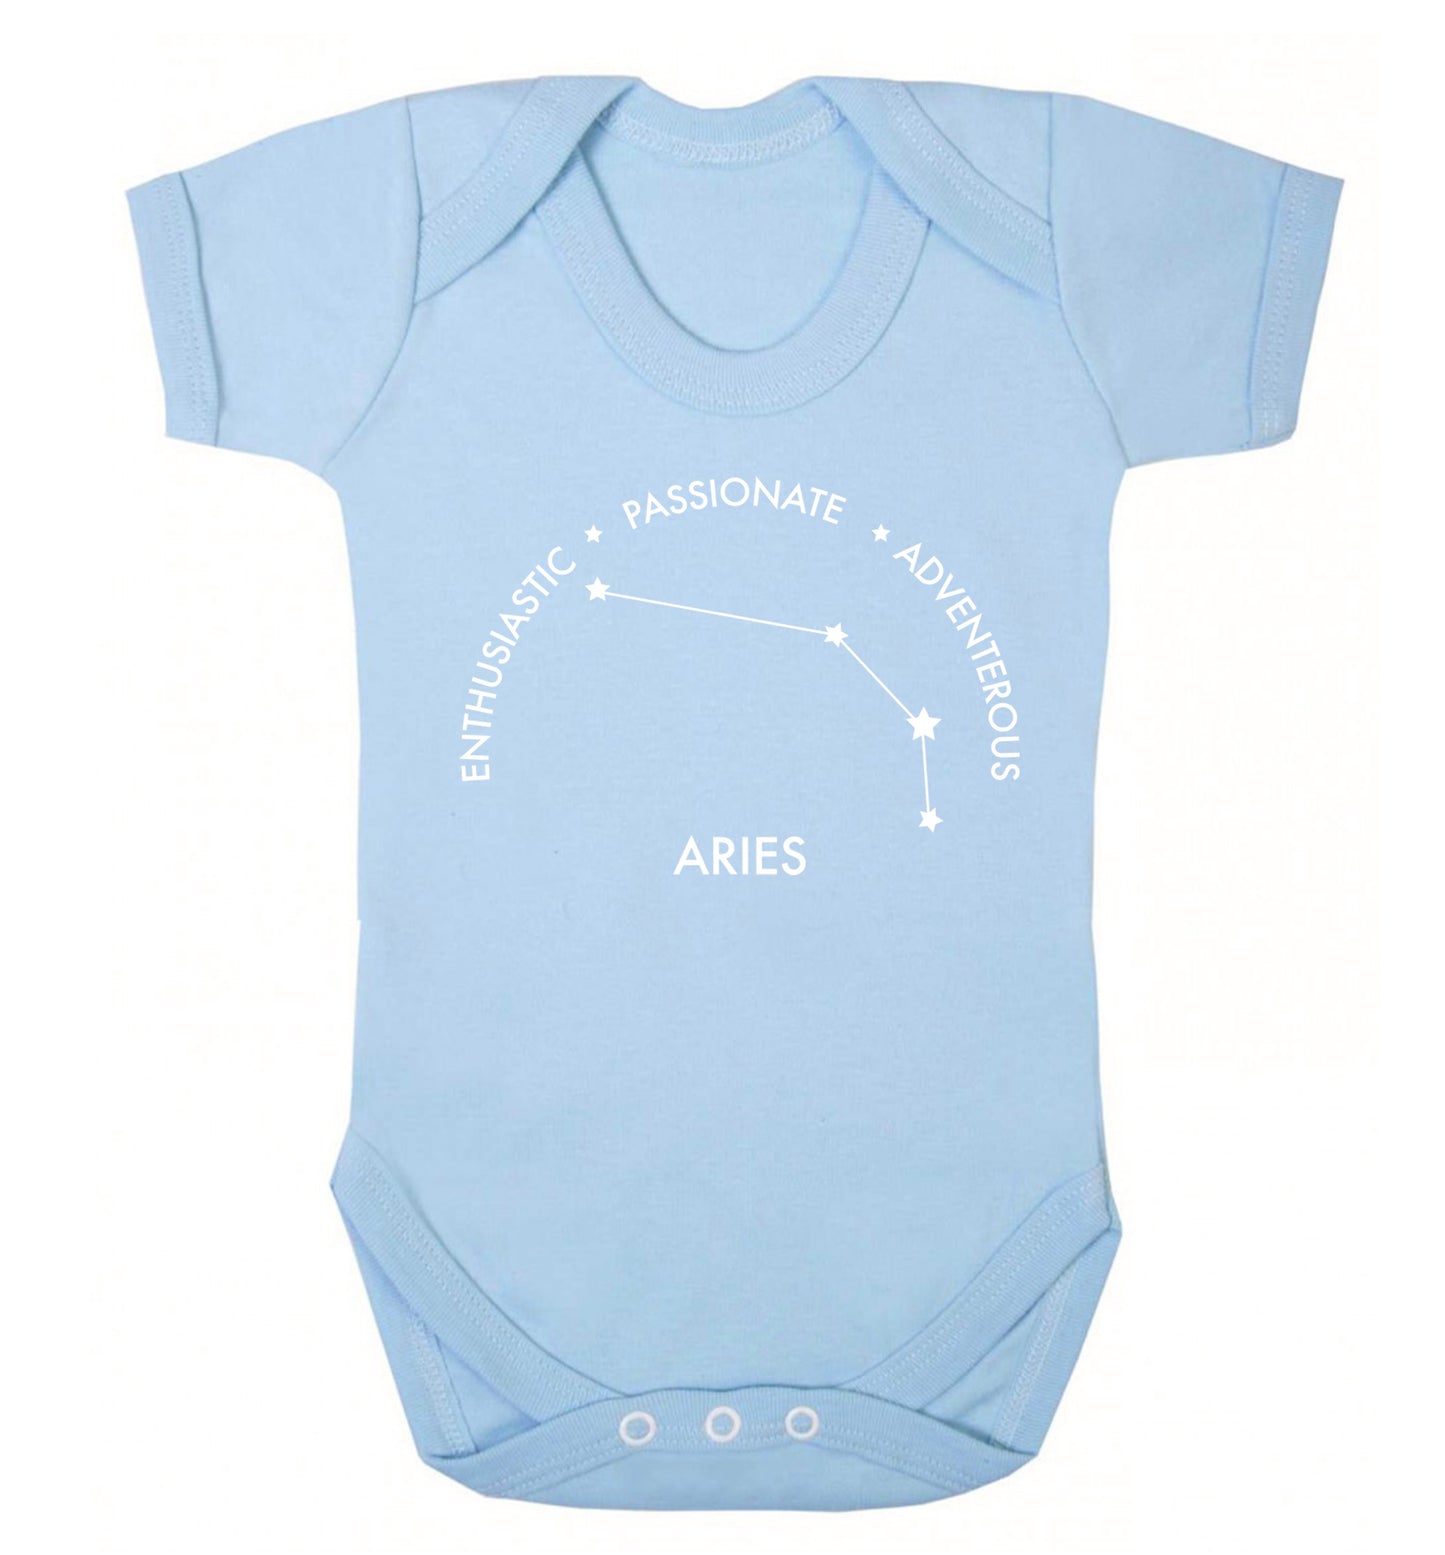 Aries enthusiastic | passionate | adventerous Baby Vest pale blue 18-24 months